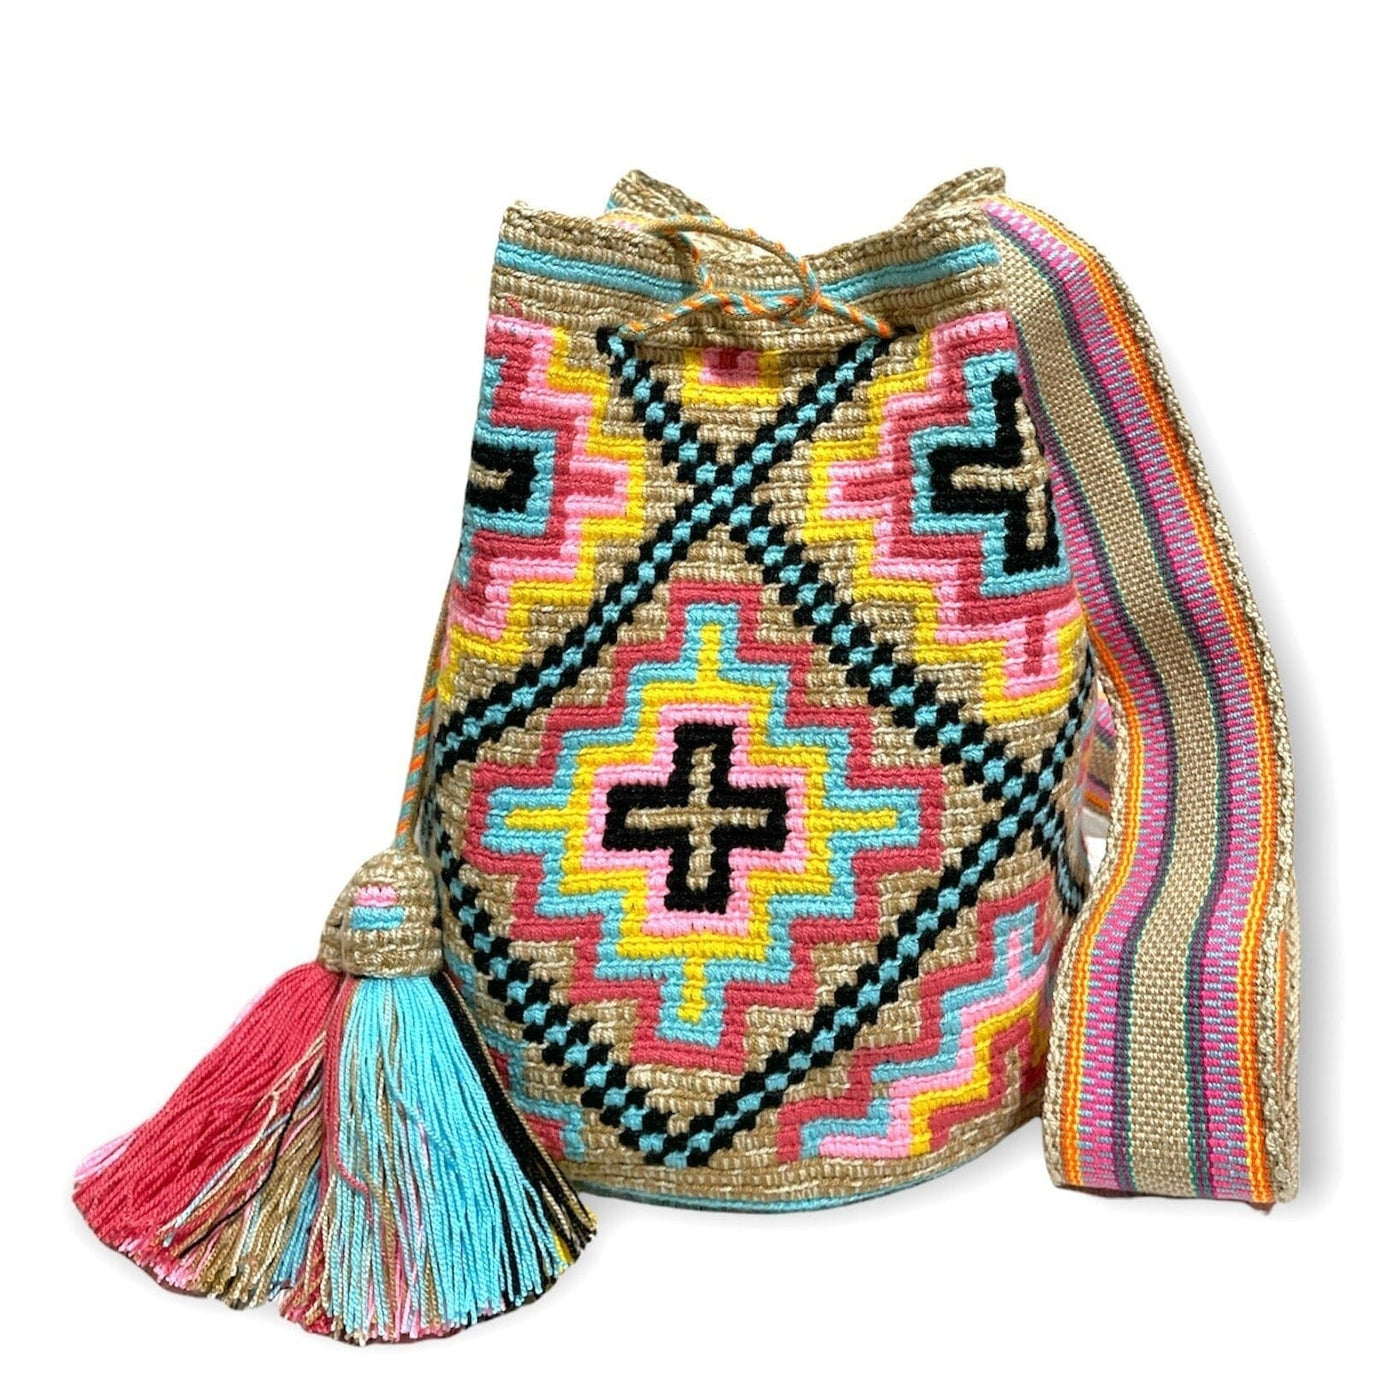 Coral Boho Beach Bag | Teal Summer Crossbody Bag | Colorful 4u Large Crochet Bag